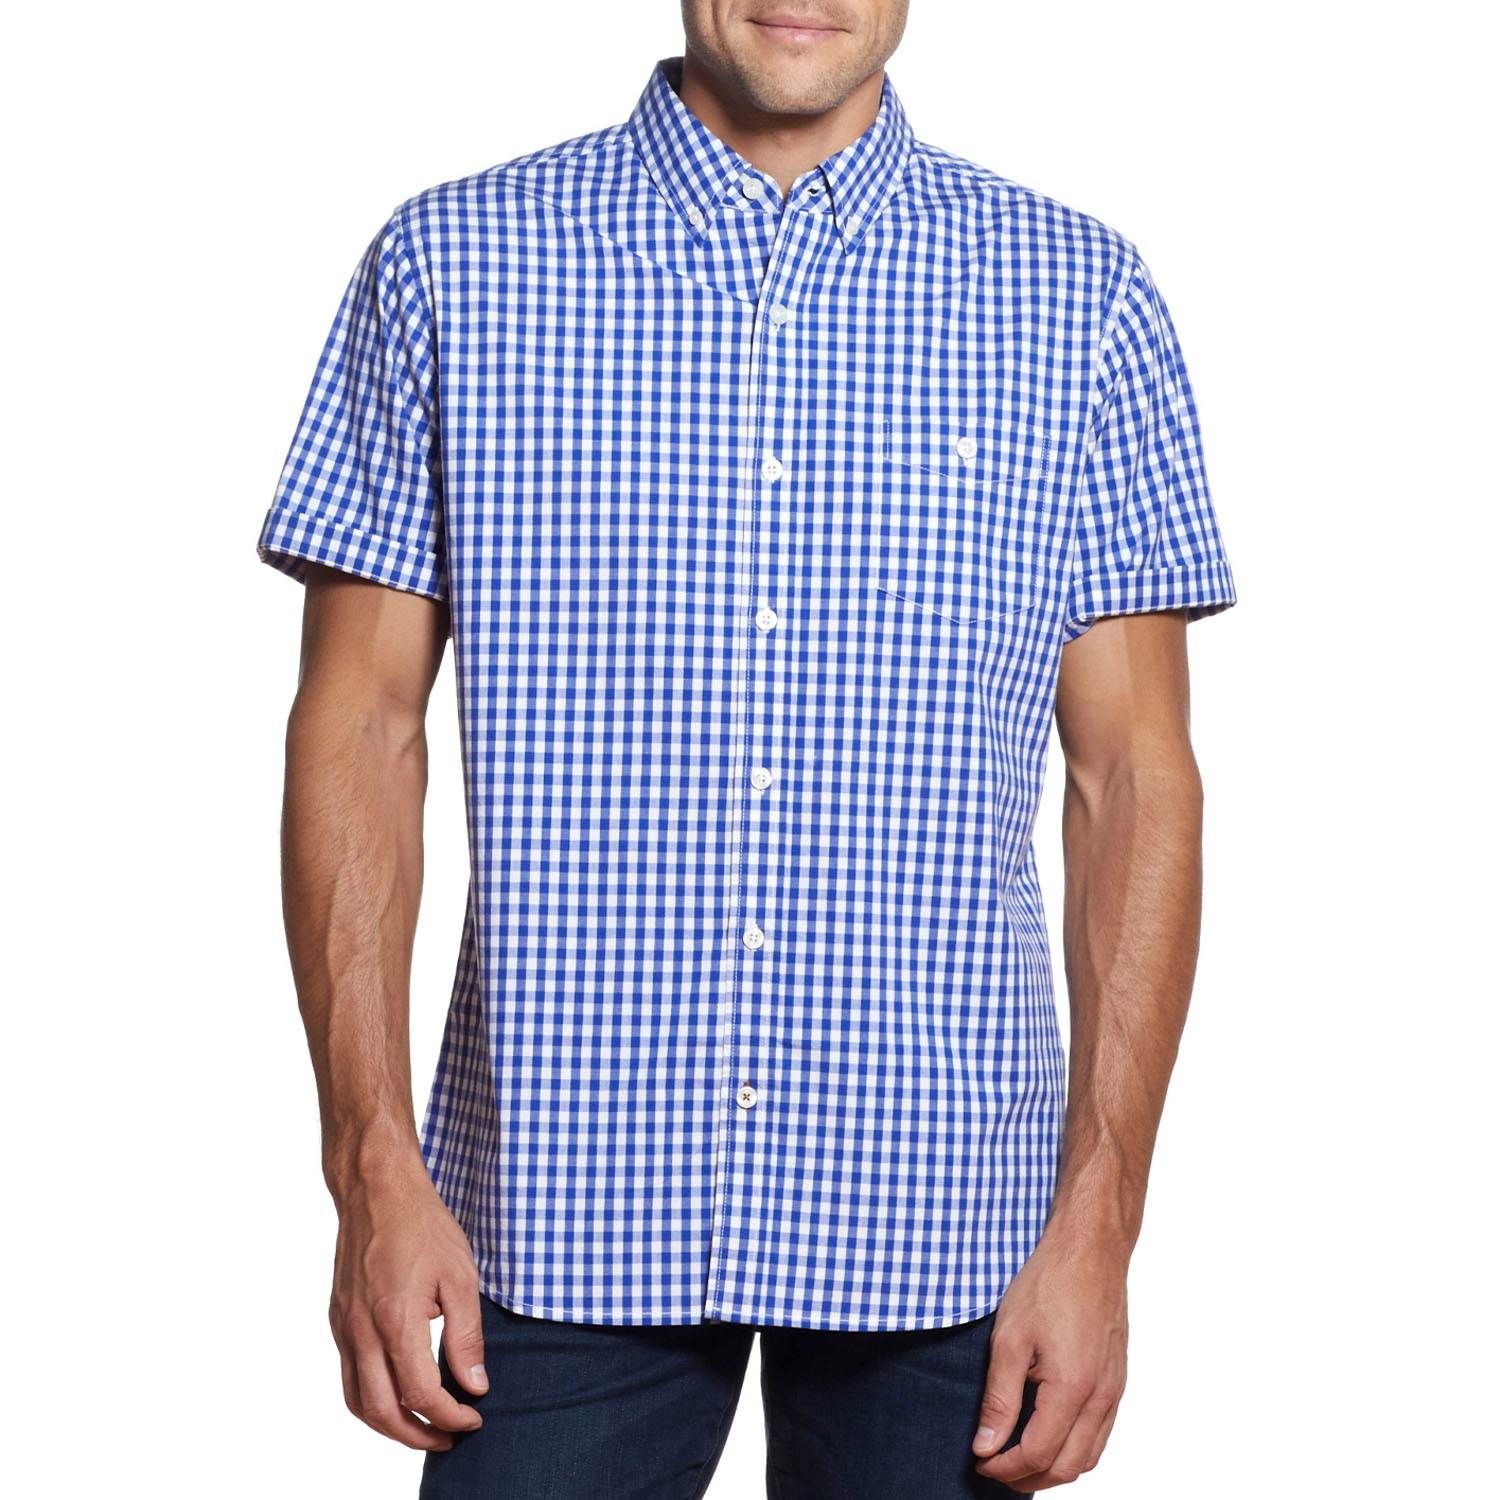 WP Weatherproof Men's Short Sleeve Woven Shirt | Button Down Casual Shirt | Poplin Neat Print & Gingham Check Plaid - Medium Blue Small